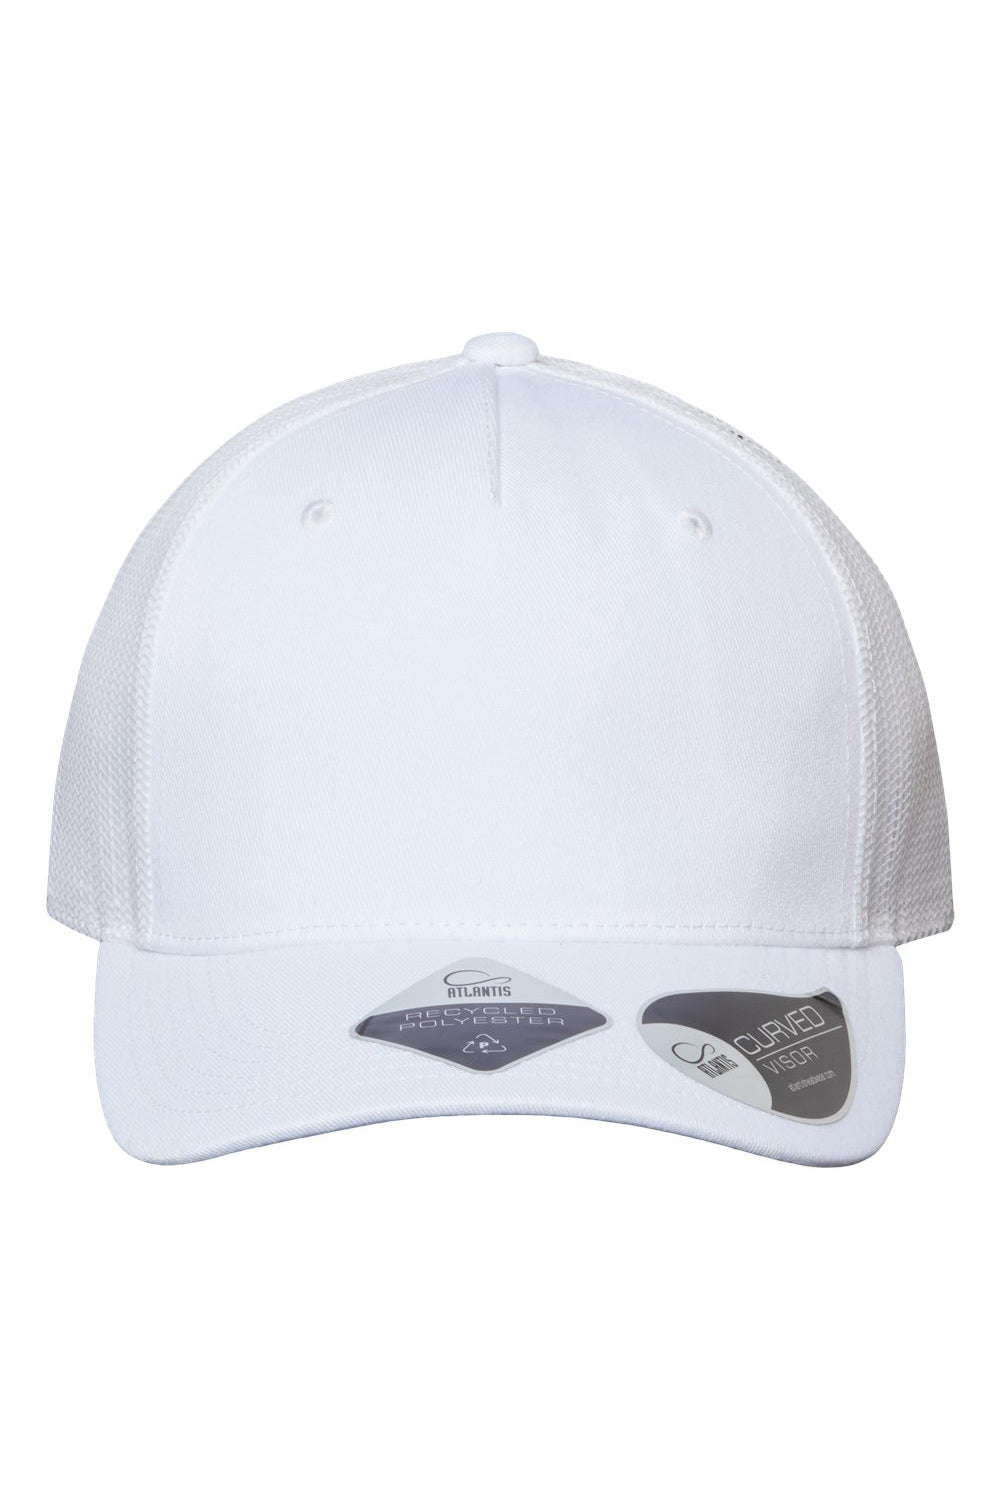 Atlantis Headwear ZION Mens Sustainable Snapback Trucker Hat White/White Flat Front